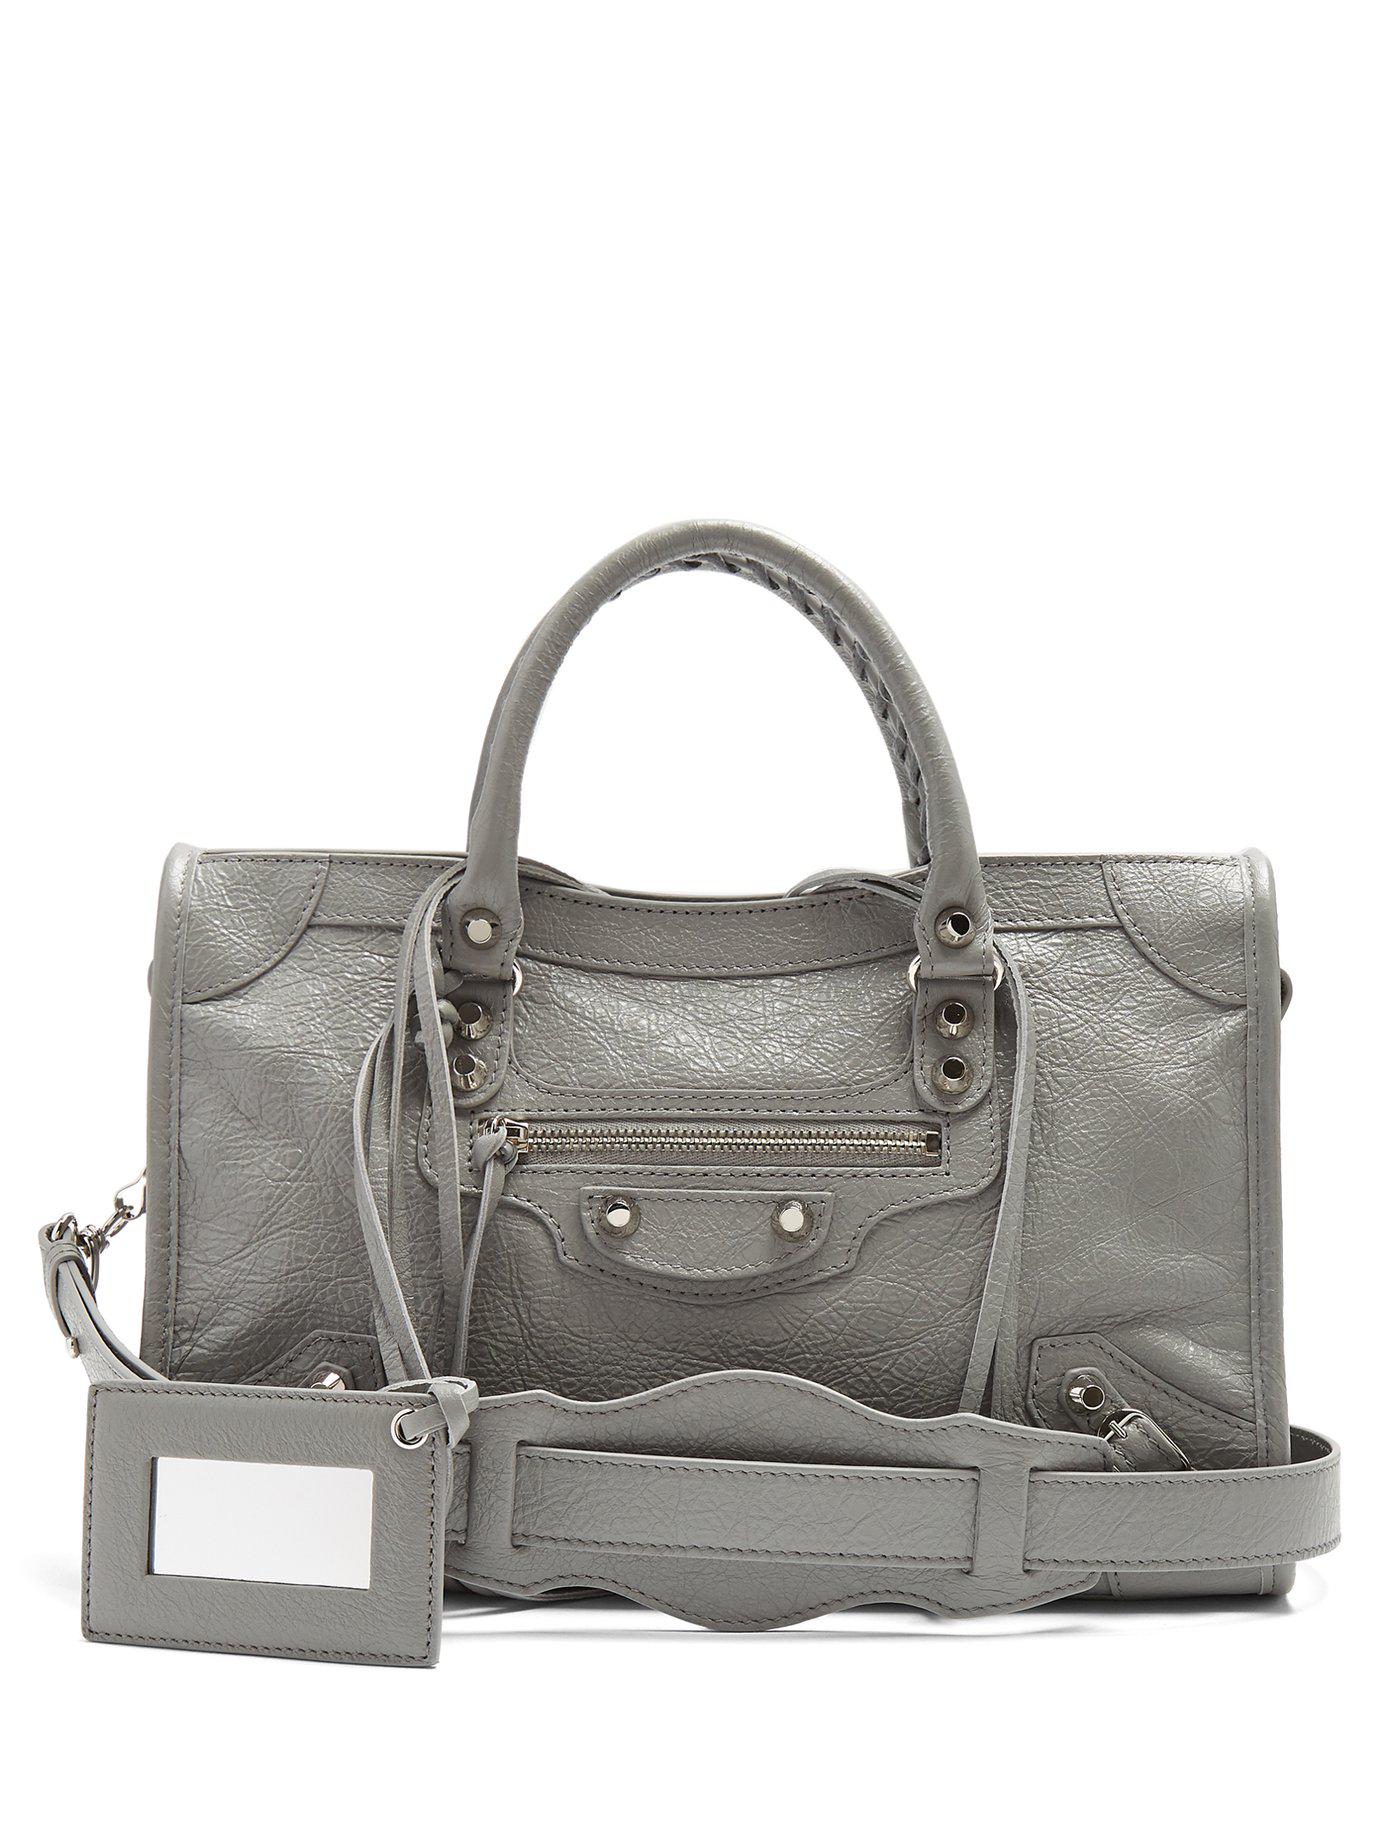 Balenciaga Classic Metallic Edge City S Bag in Gray | Lyst